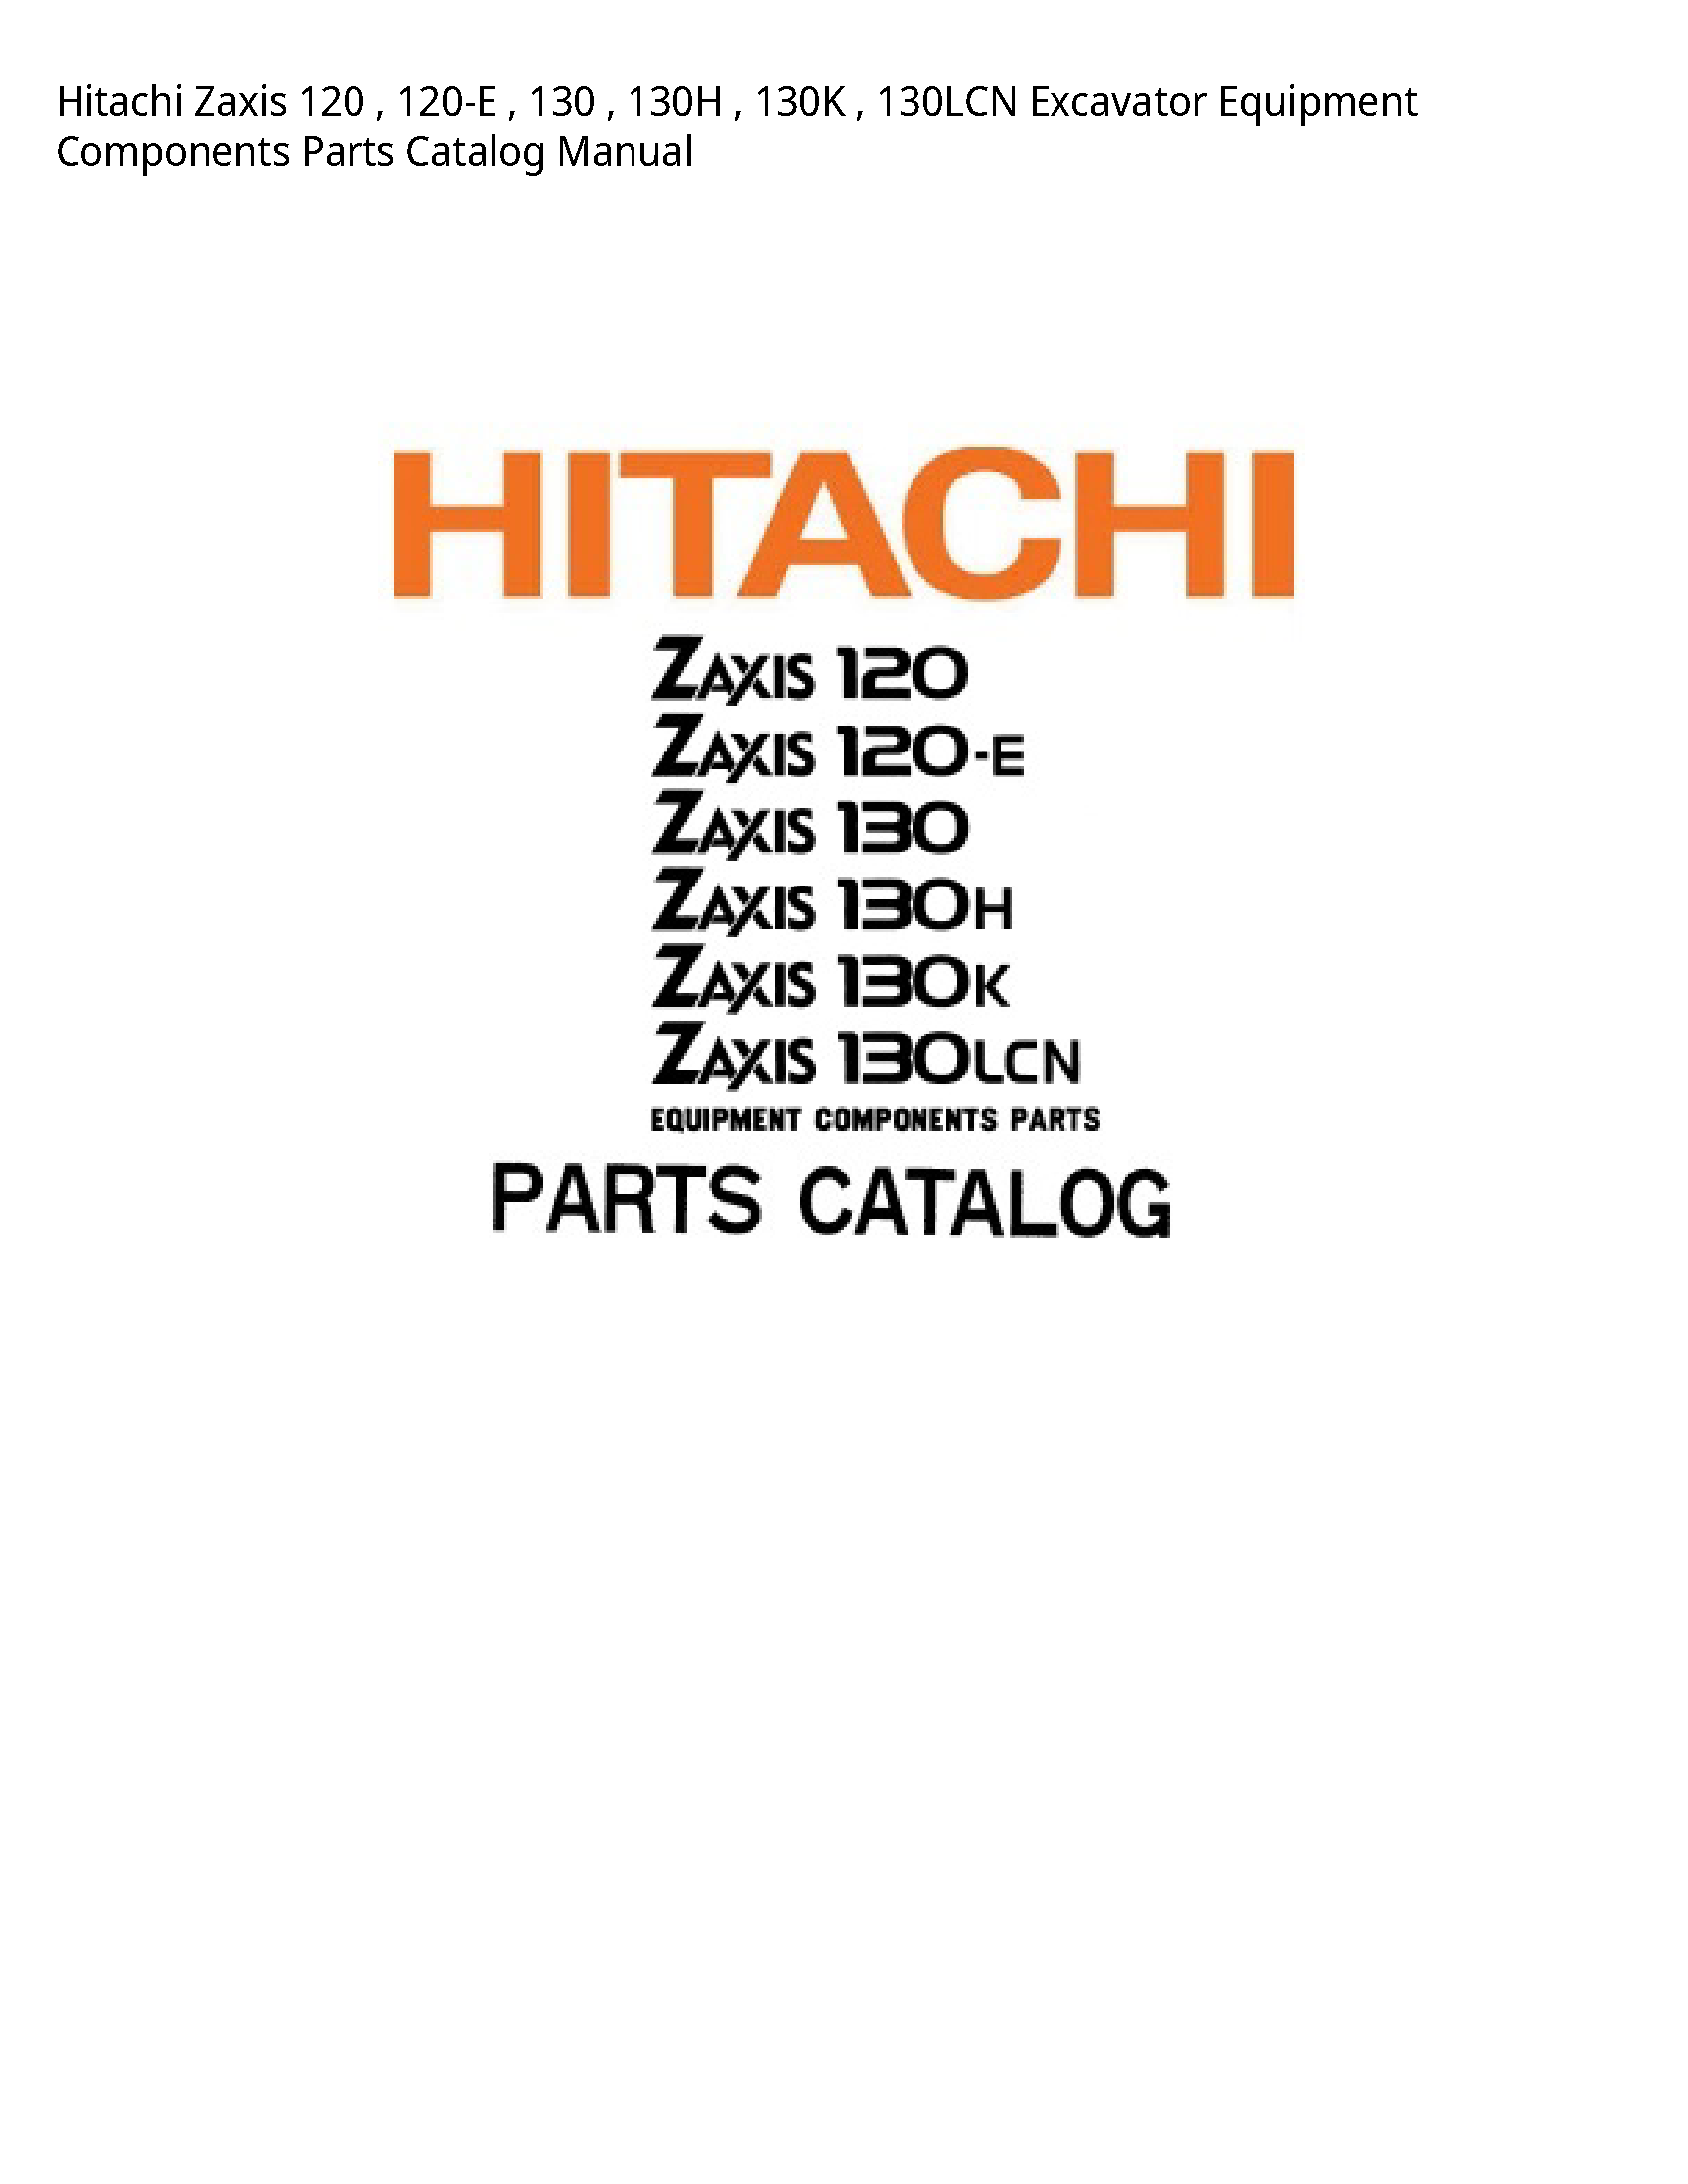 Hitachi 120 Zaxis Excavator Equipment Components Parts Catalog manual